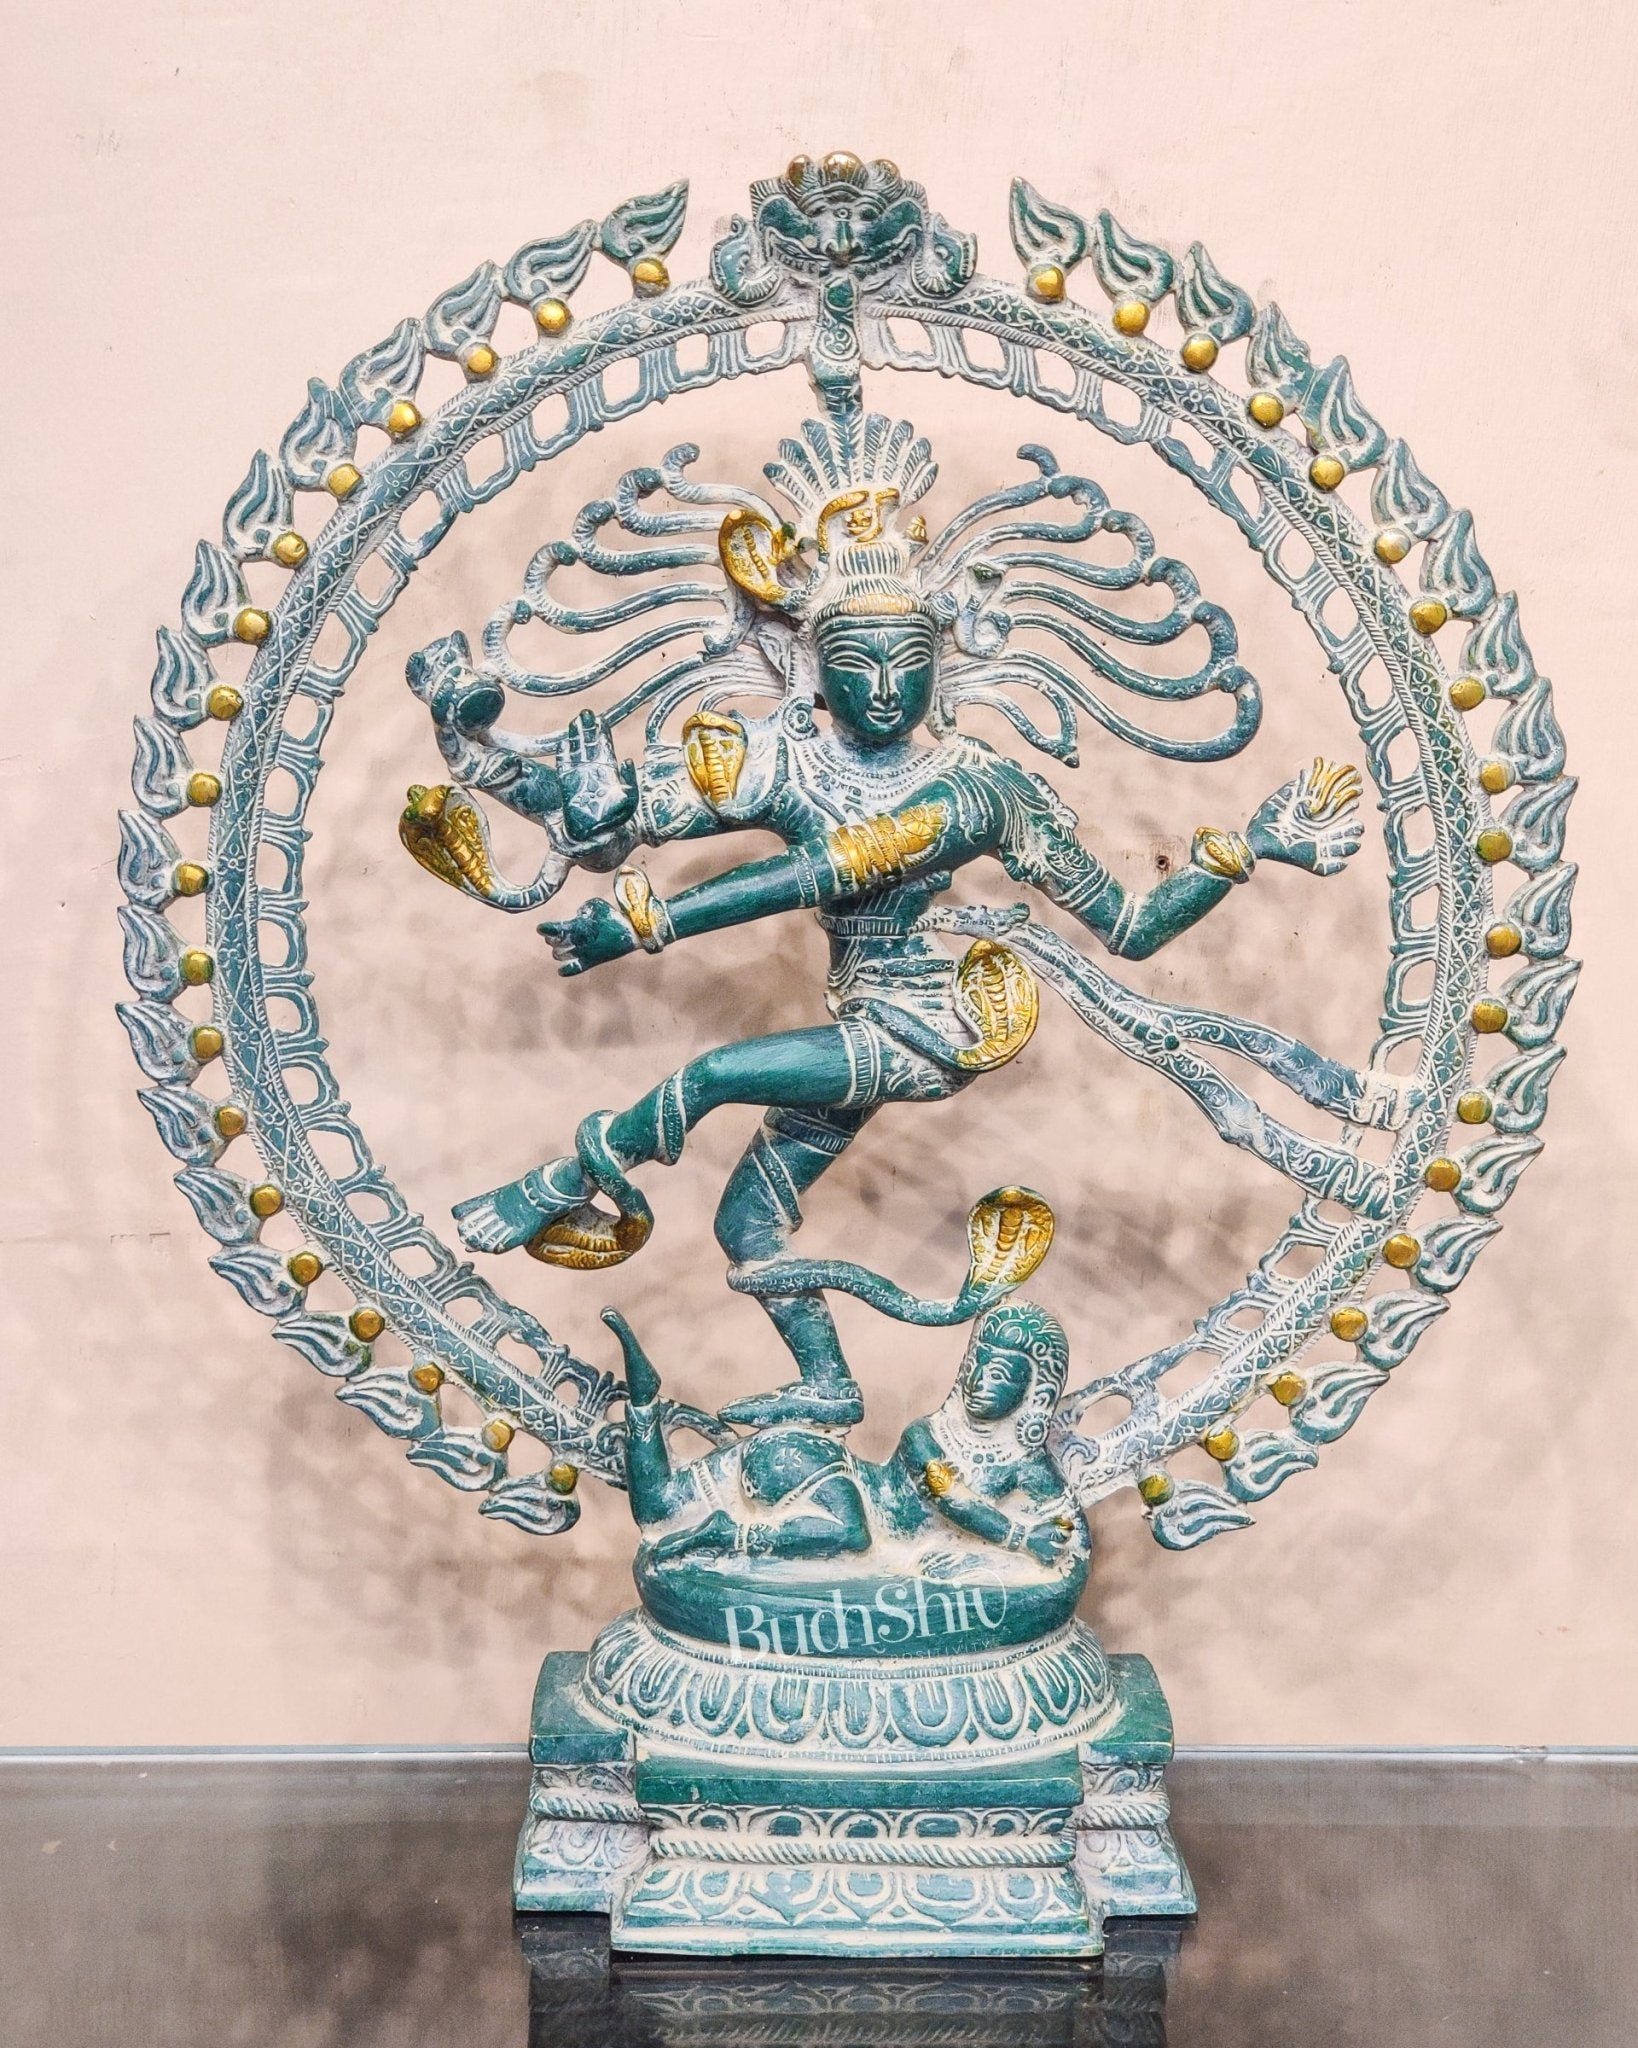 Nataraja - The God of Dance | Fine Brass Statue | 20" Height - Budhshiv.com